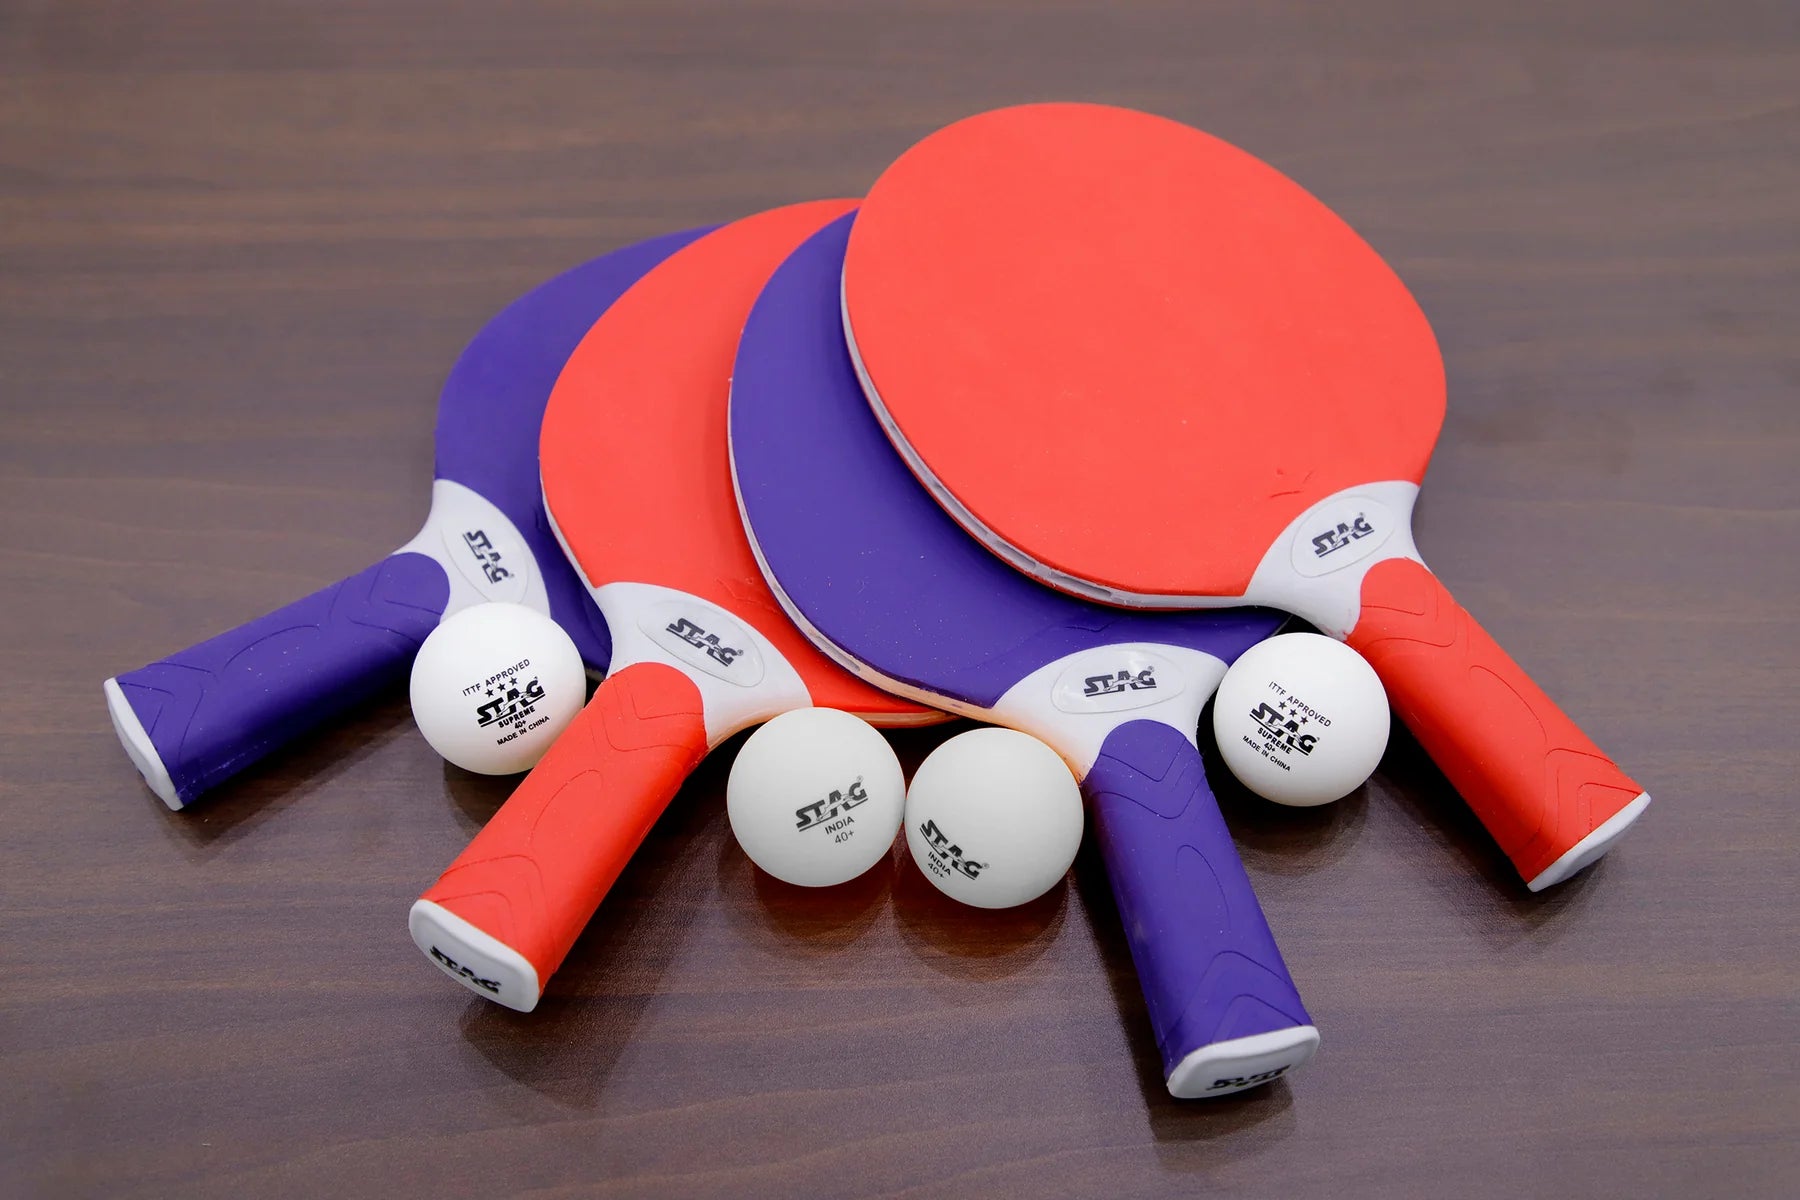 Kettler Kona Outdoor Tennis Table 4-Player Bundle